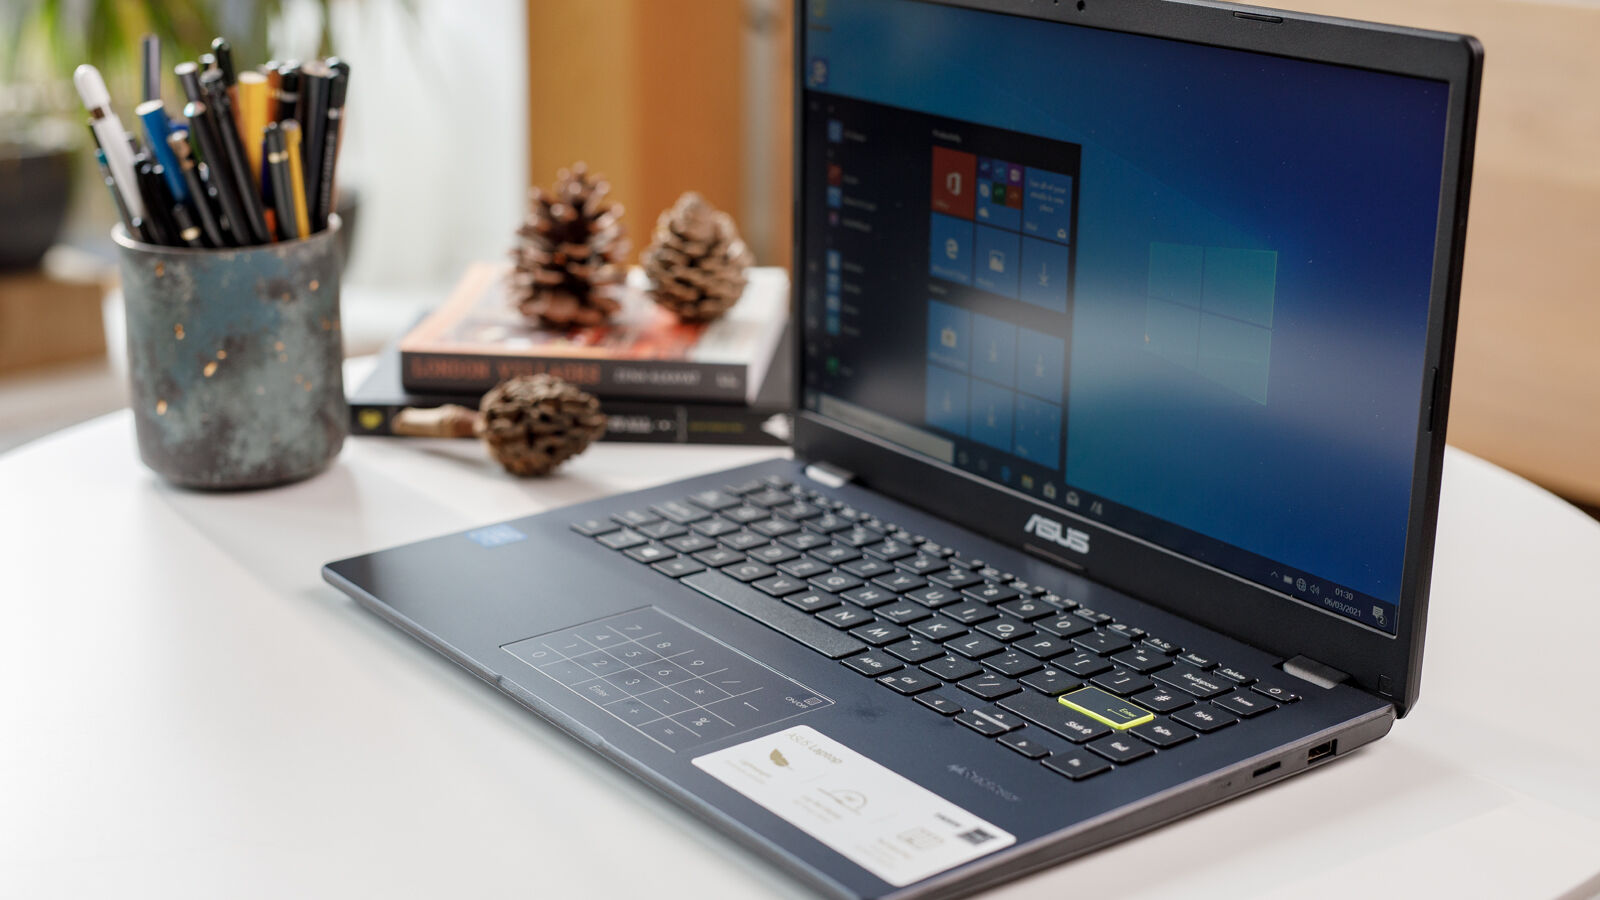 ASUS E410m Laptop Price in Pakistan